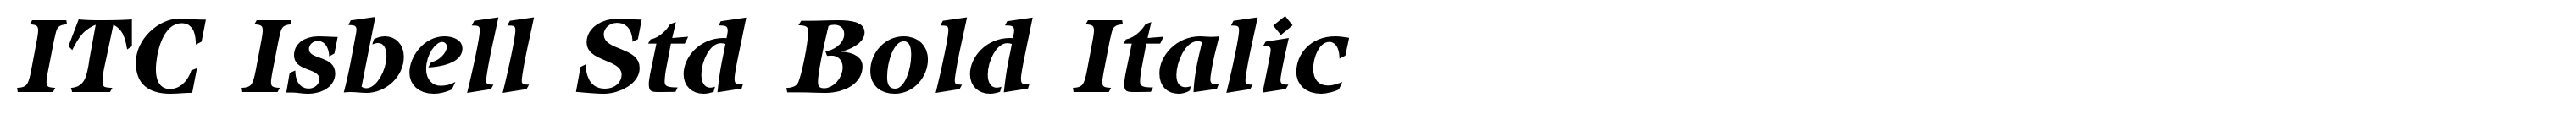 ITC Isbell Std Bold Italic